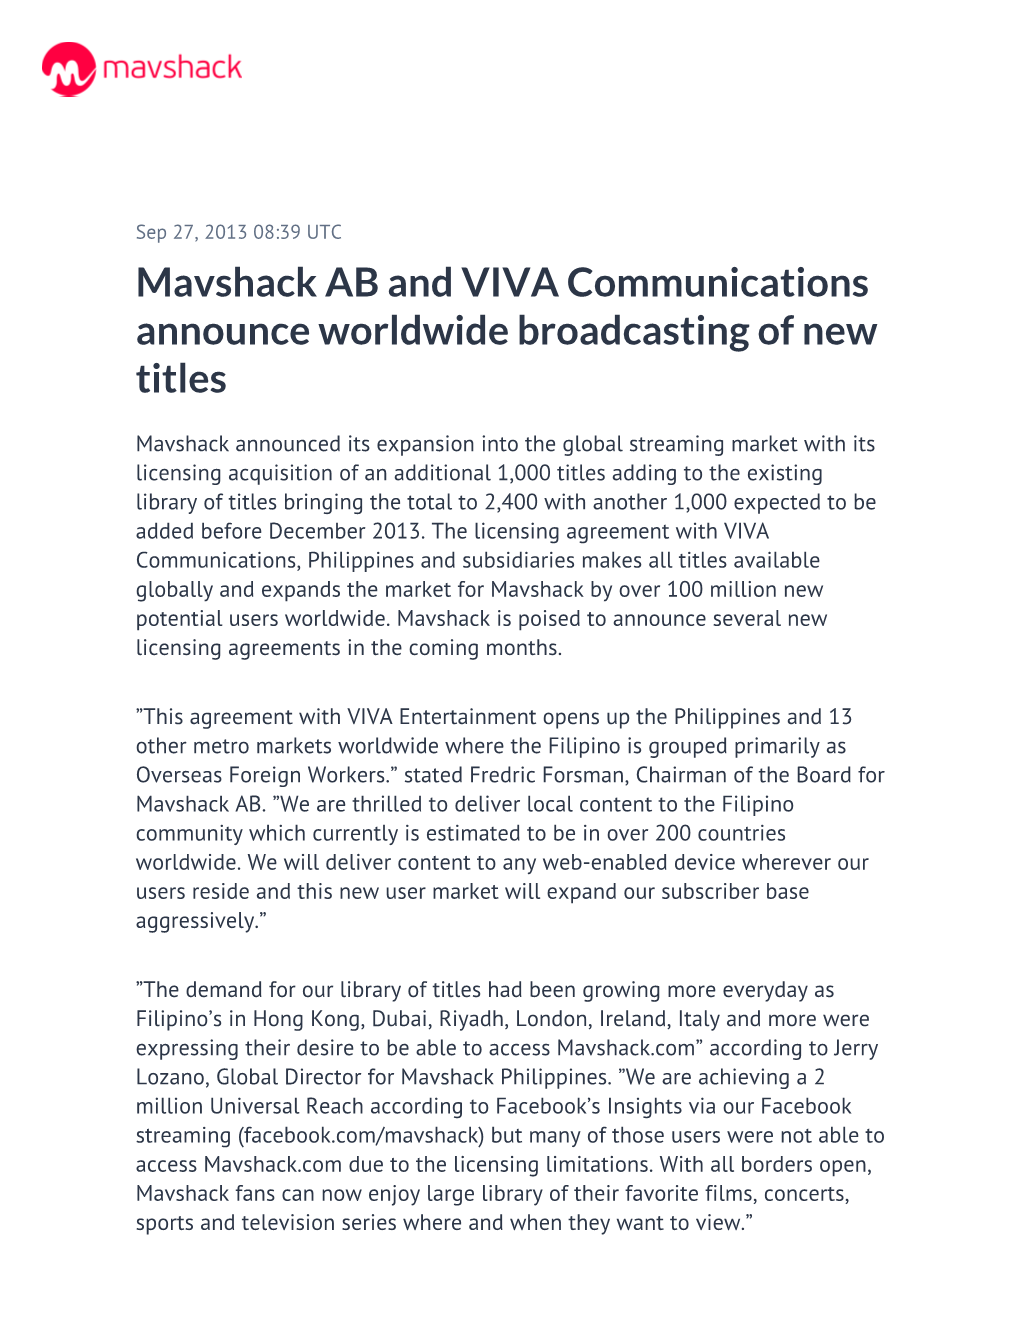 Mavshack AB and VIVA Communications Announce Worldwide Broadcasting of New Titles